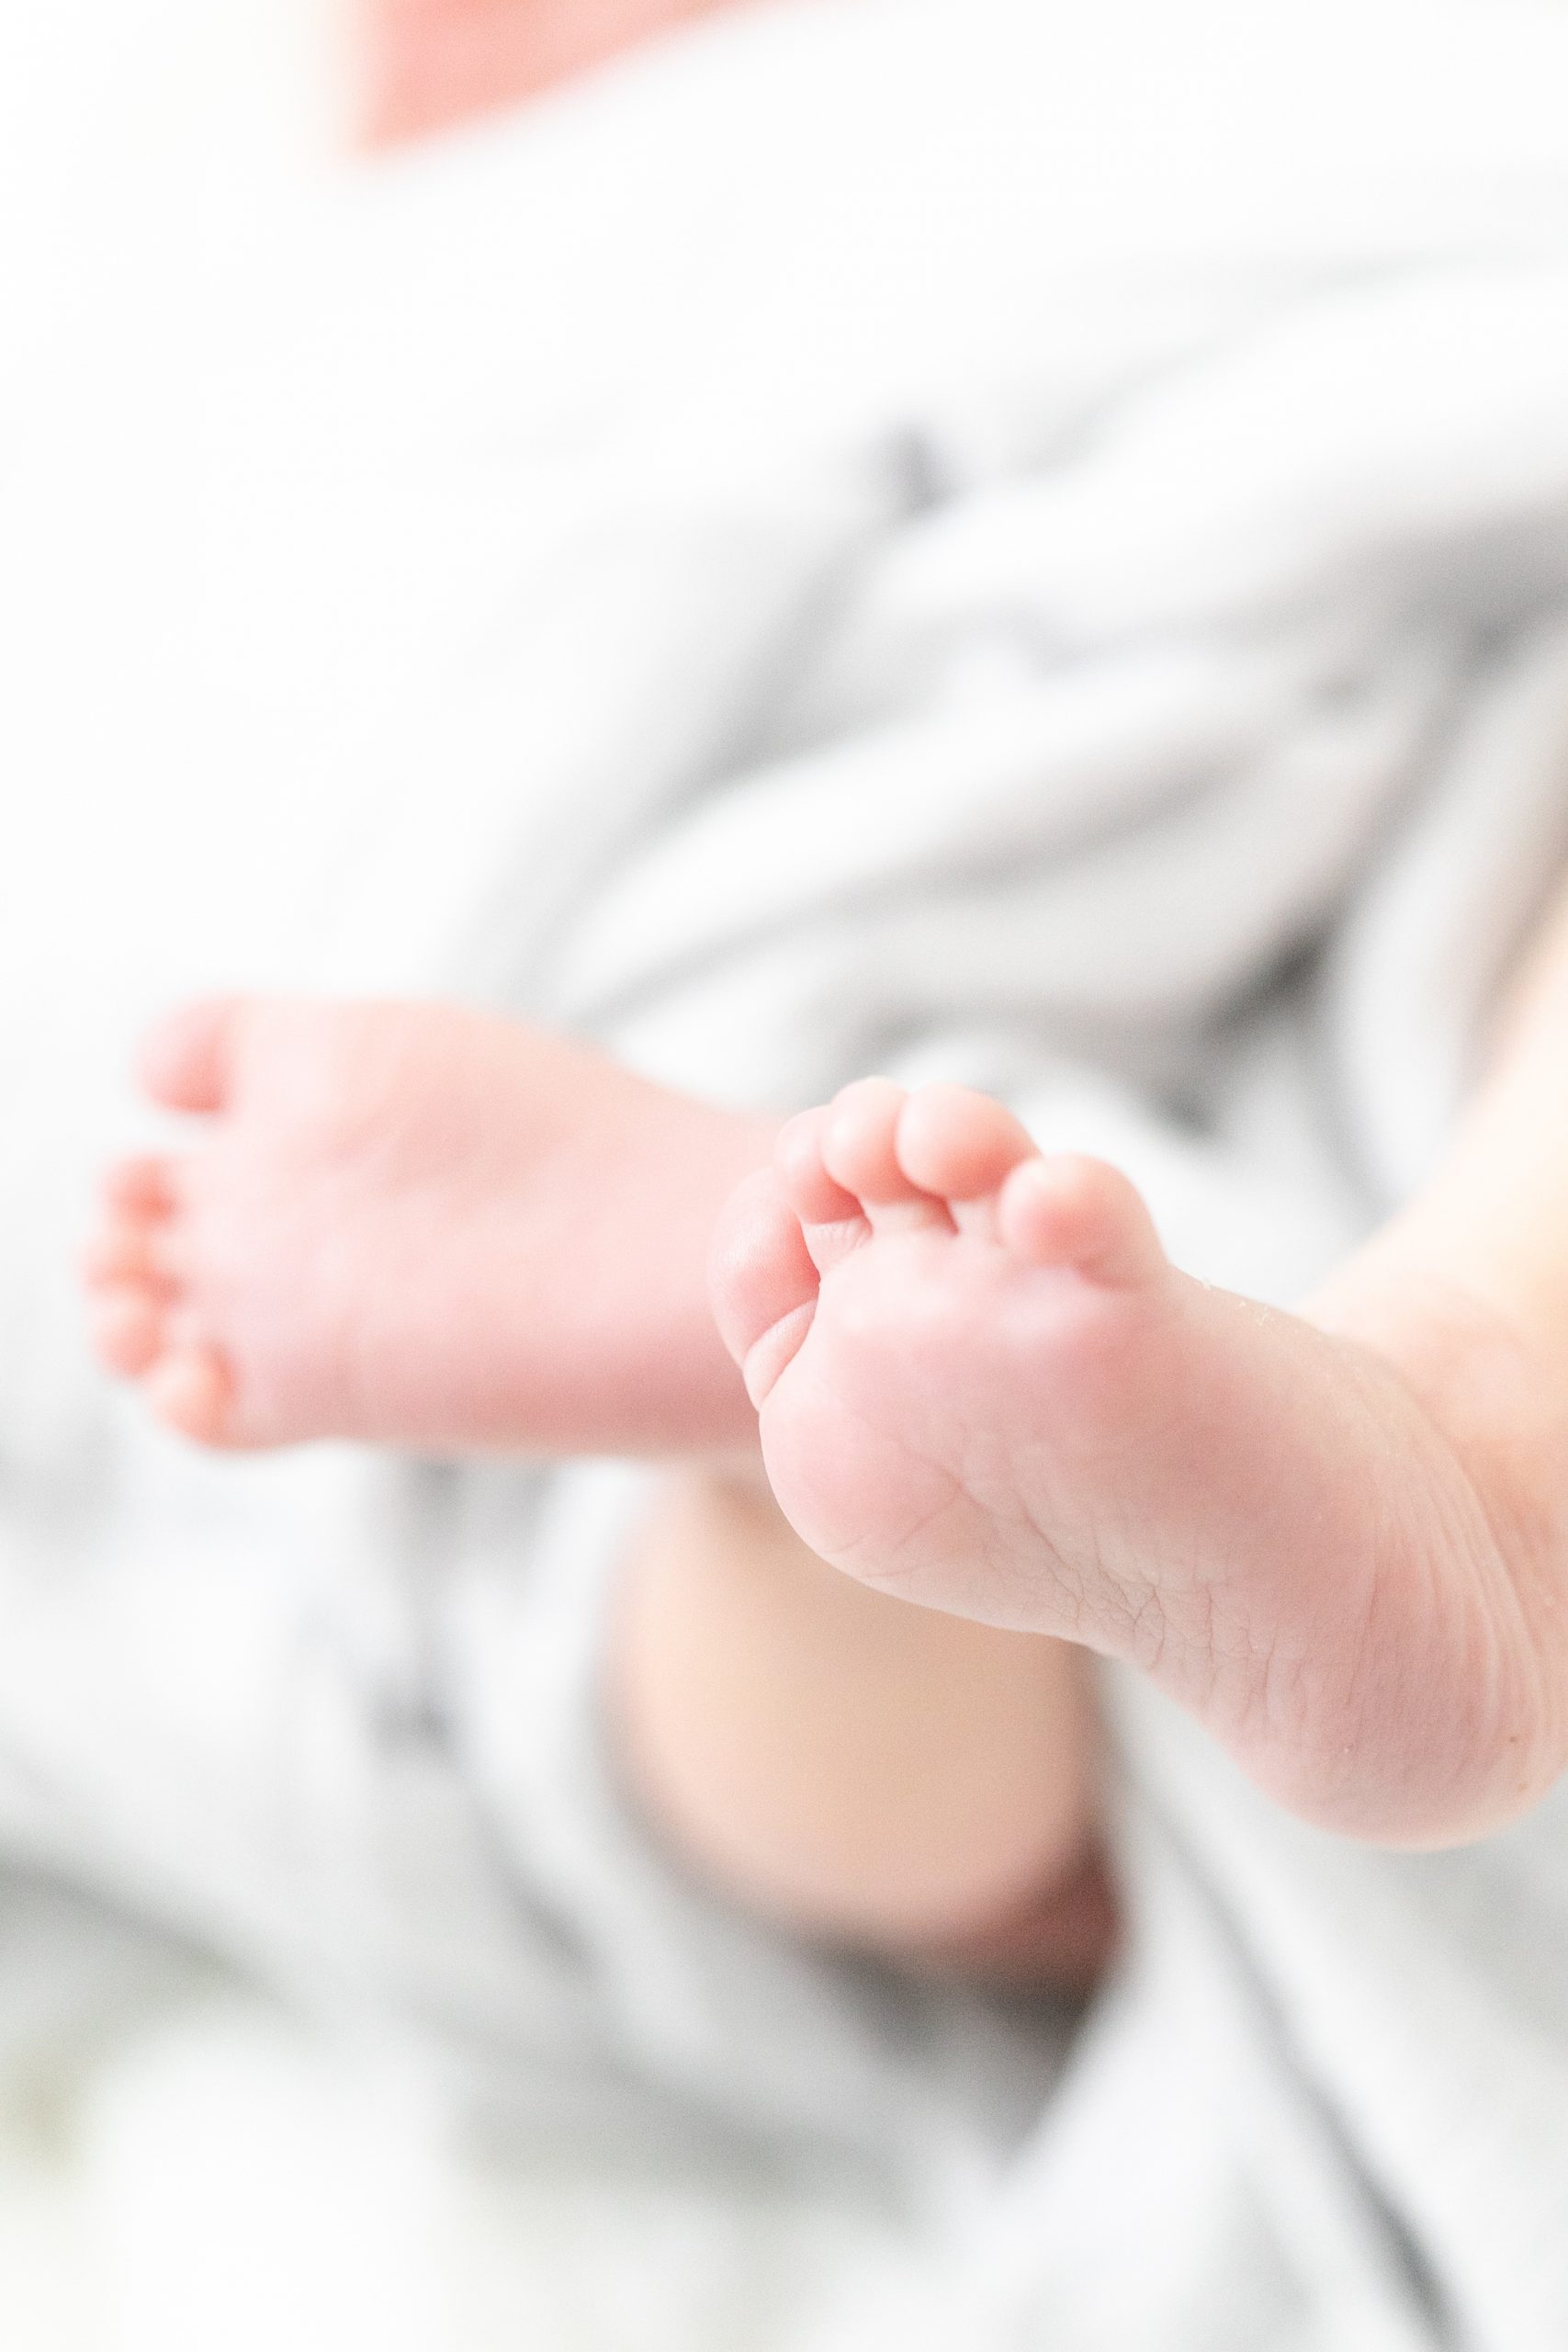 lifestyle newborn session portraits of baby's feet